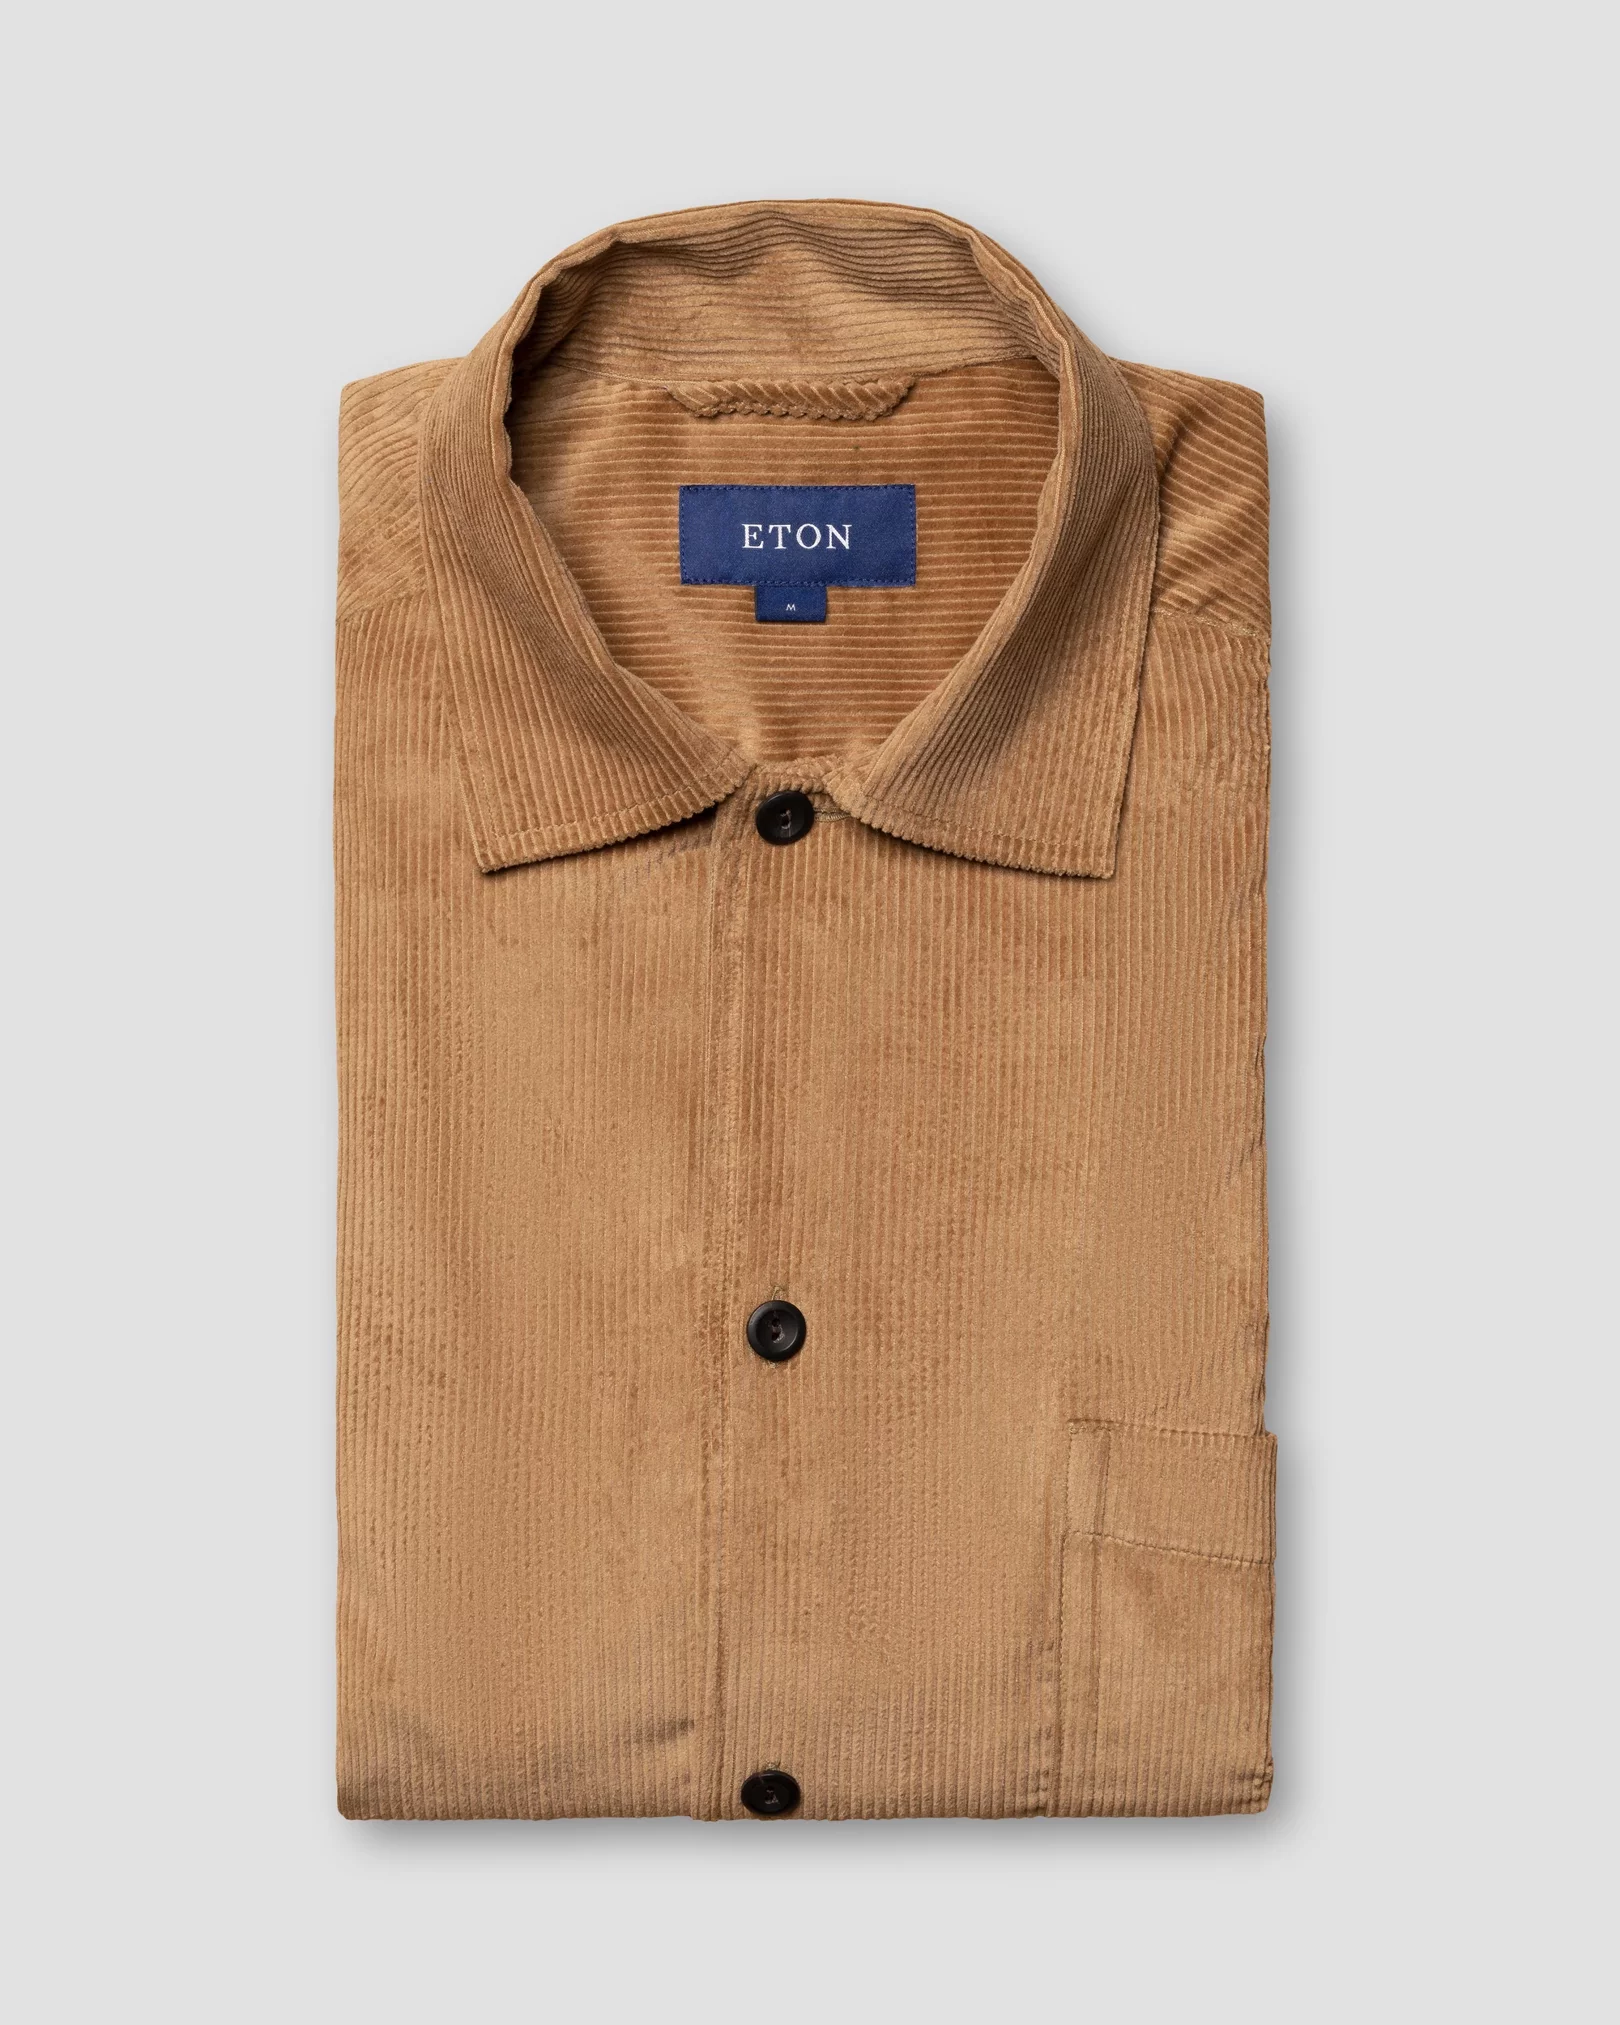 Eton - light brown corduroy overshirt turn down straight sleeve end regular